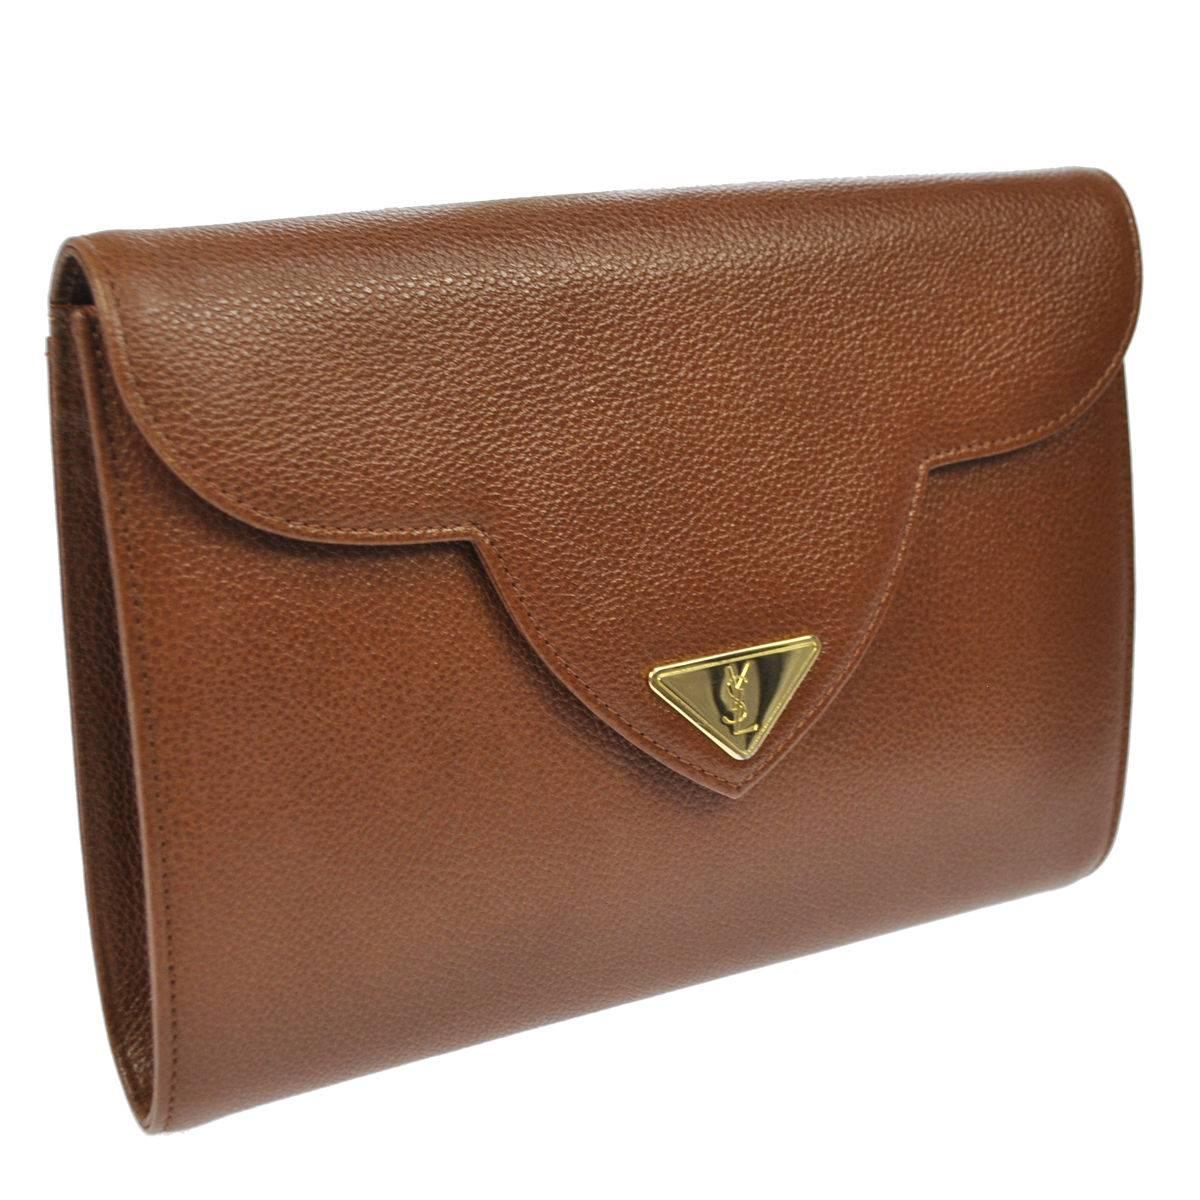 YSL Cognac Leather Gold Hardware Envelope Top Handle Evening Clutch Bag